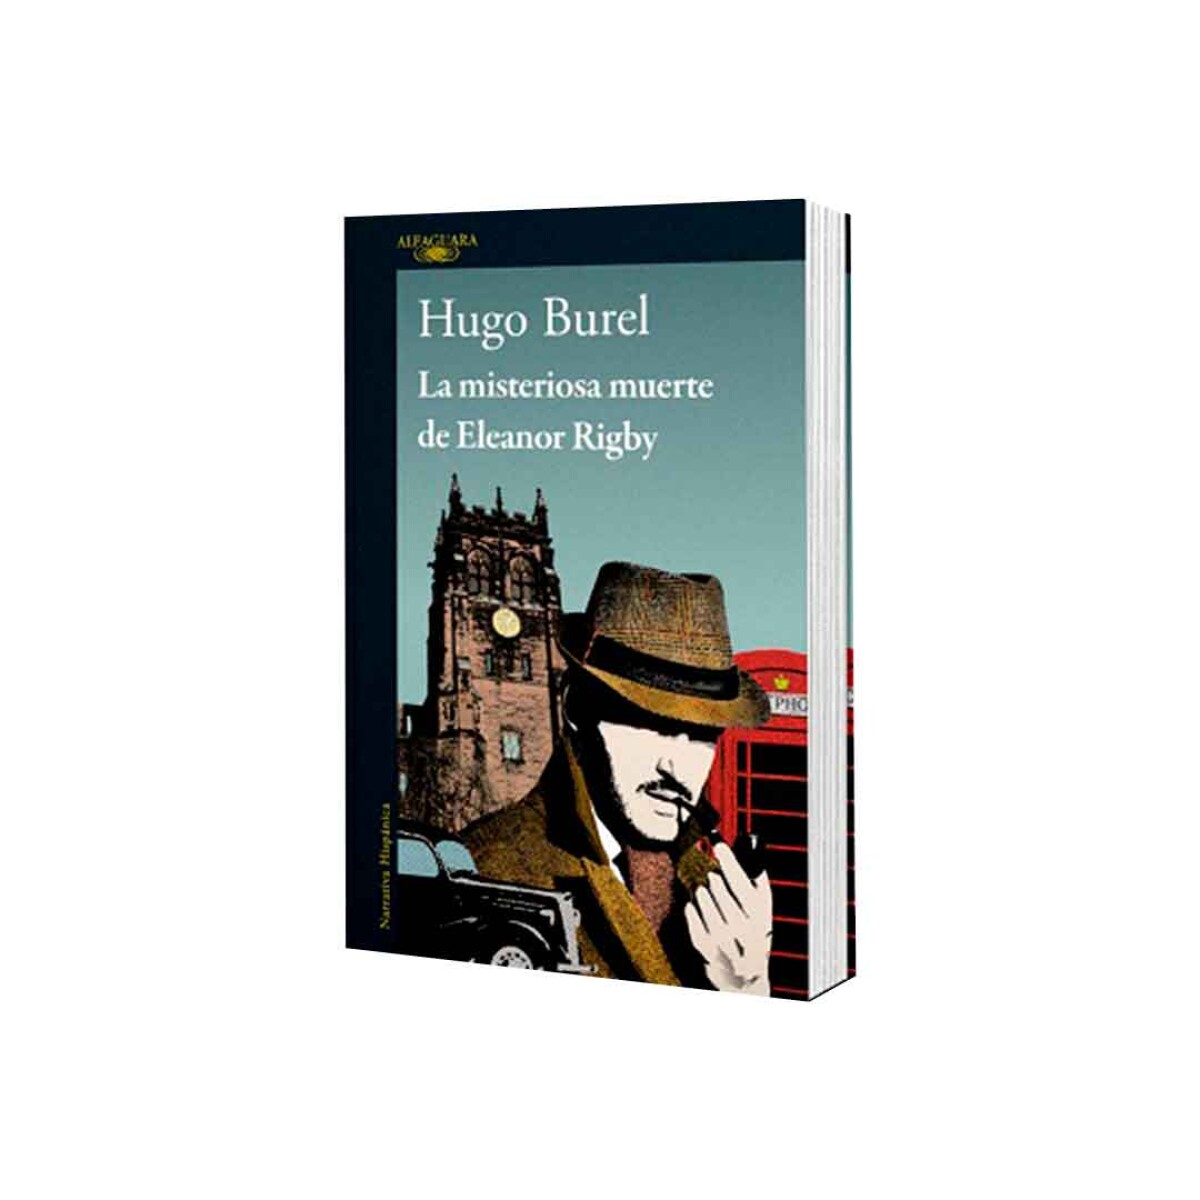 Libro La misteriosa muerte de Eleanor Rigby Hugo Burel - 001 